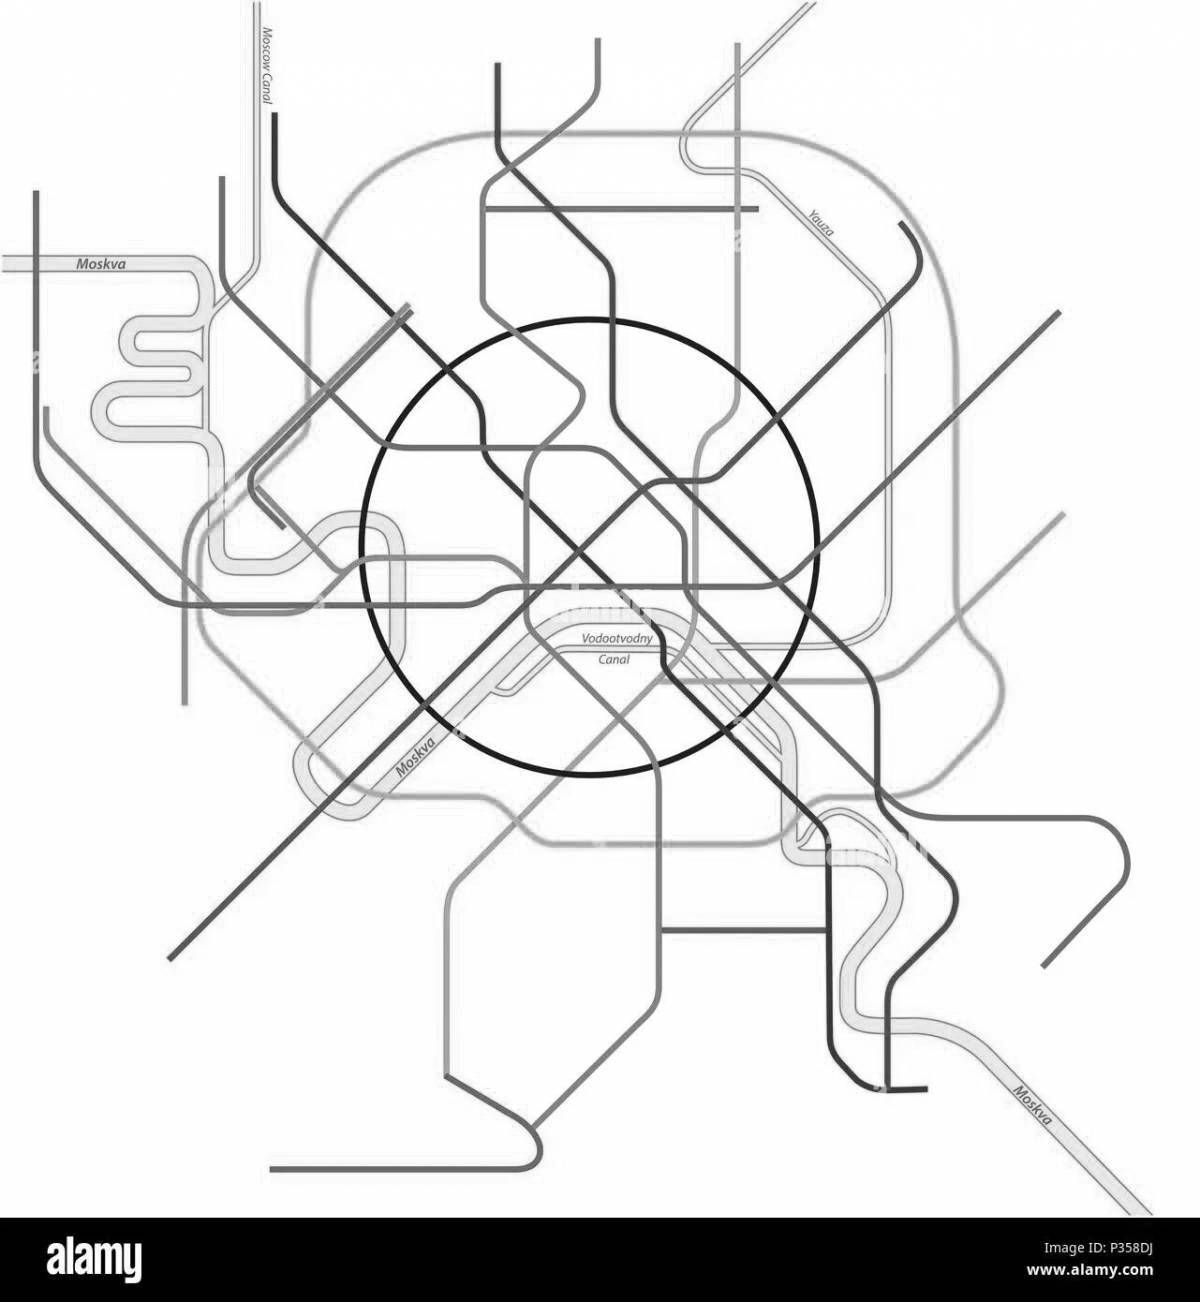 Подробная раскраска карта метро